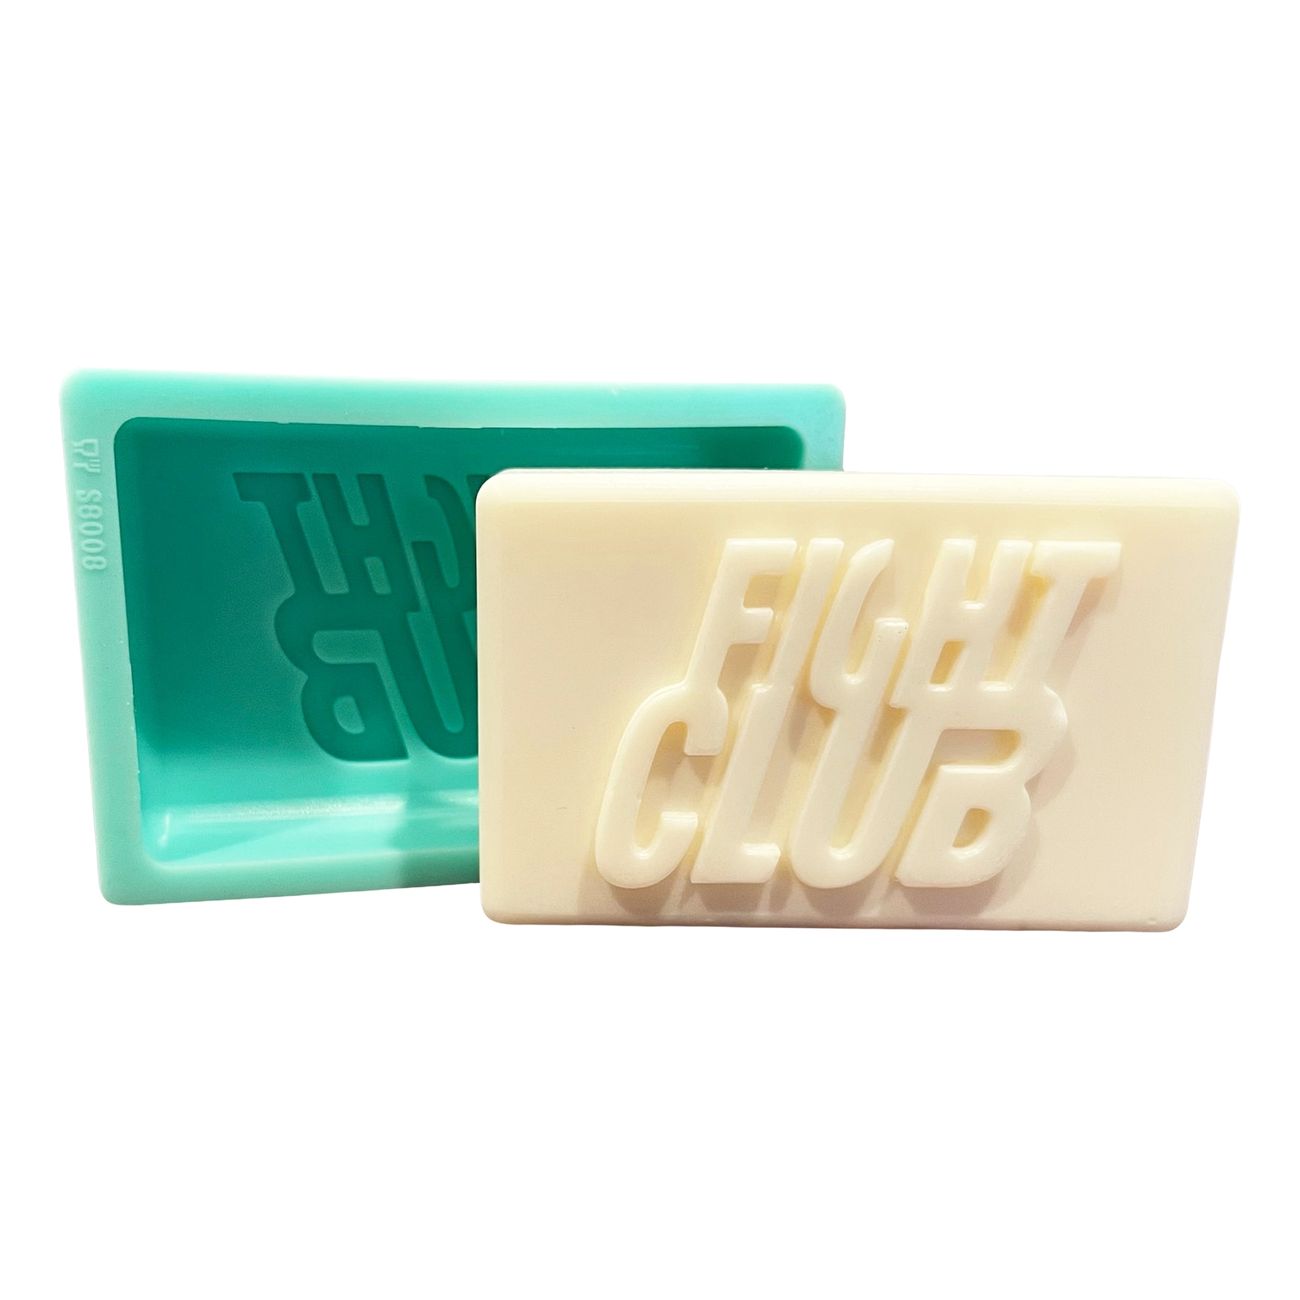 tvalform-fight-club-90872-1